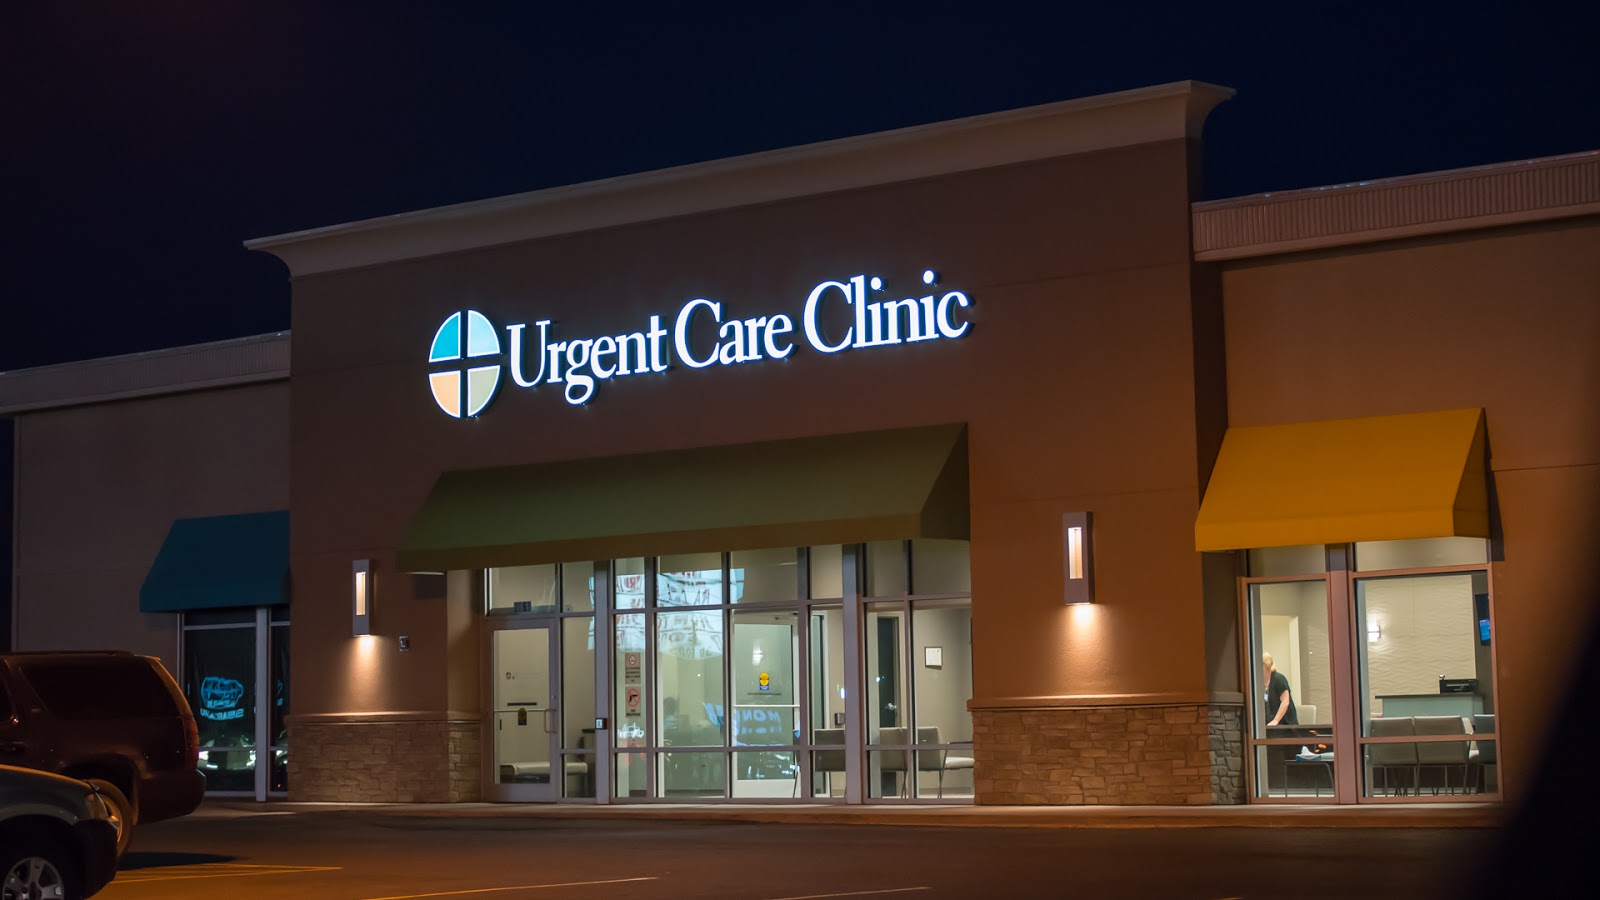 Urgent care clinics